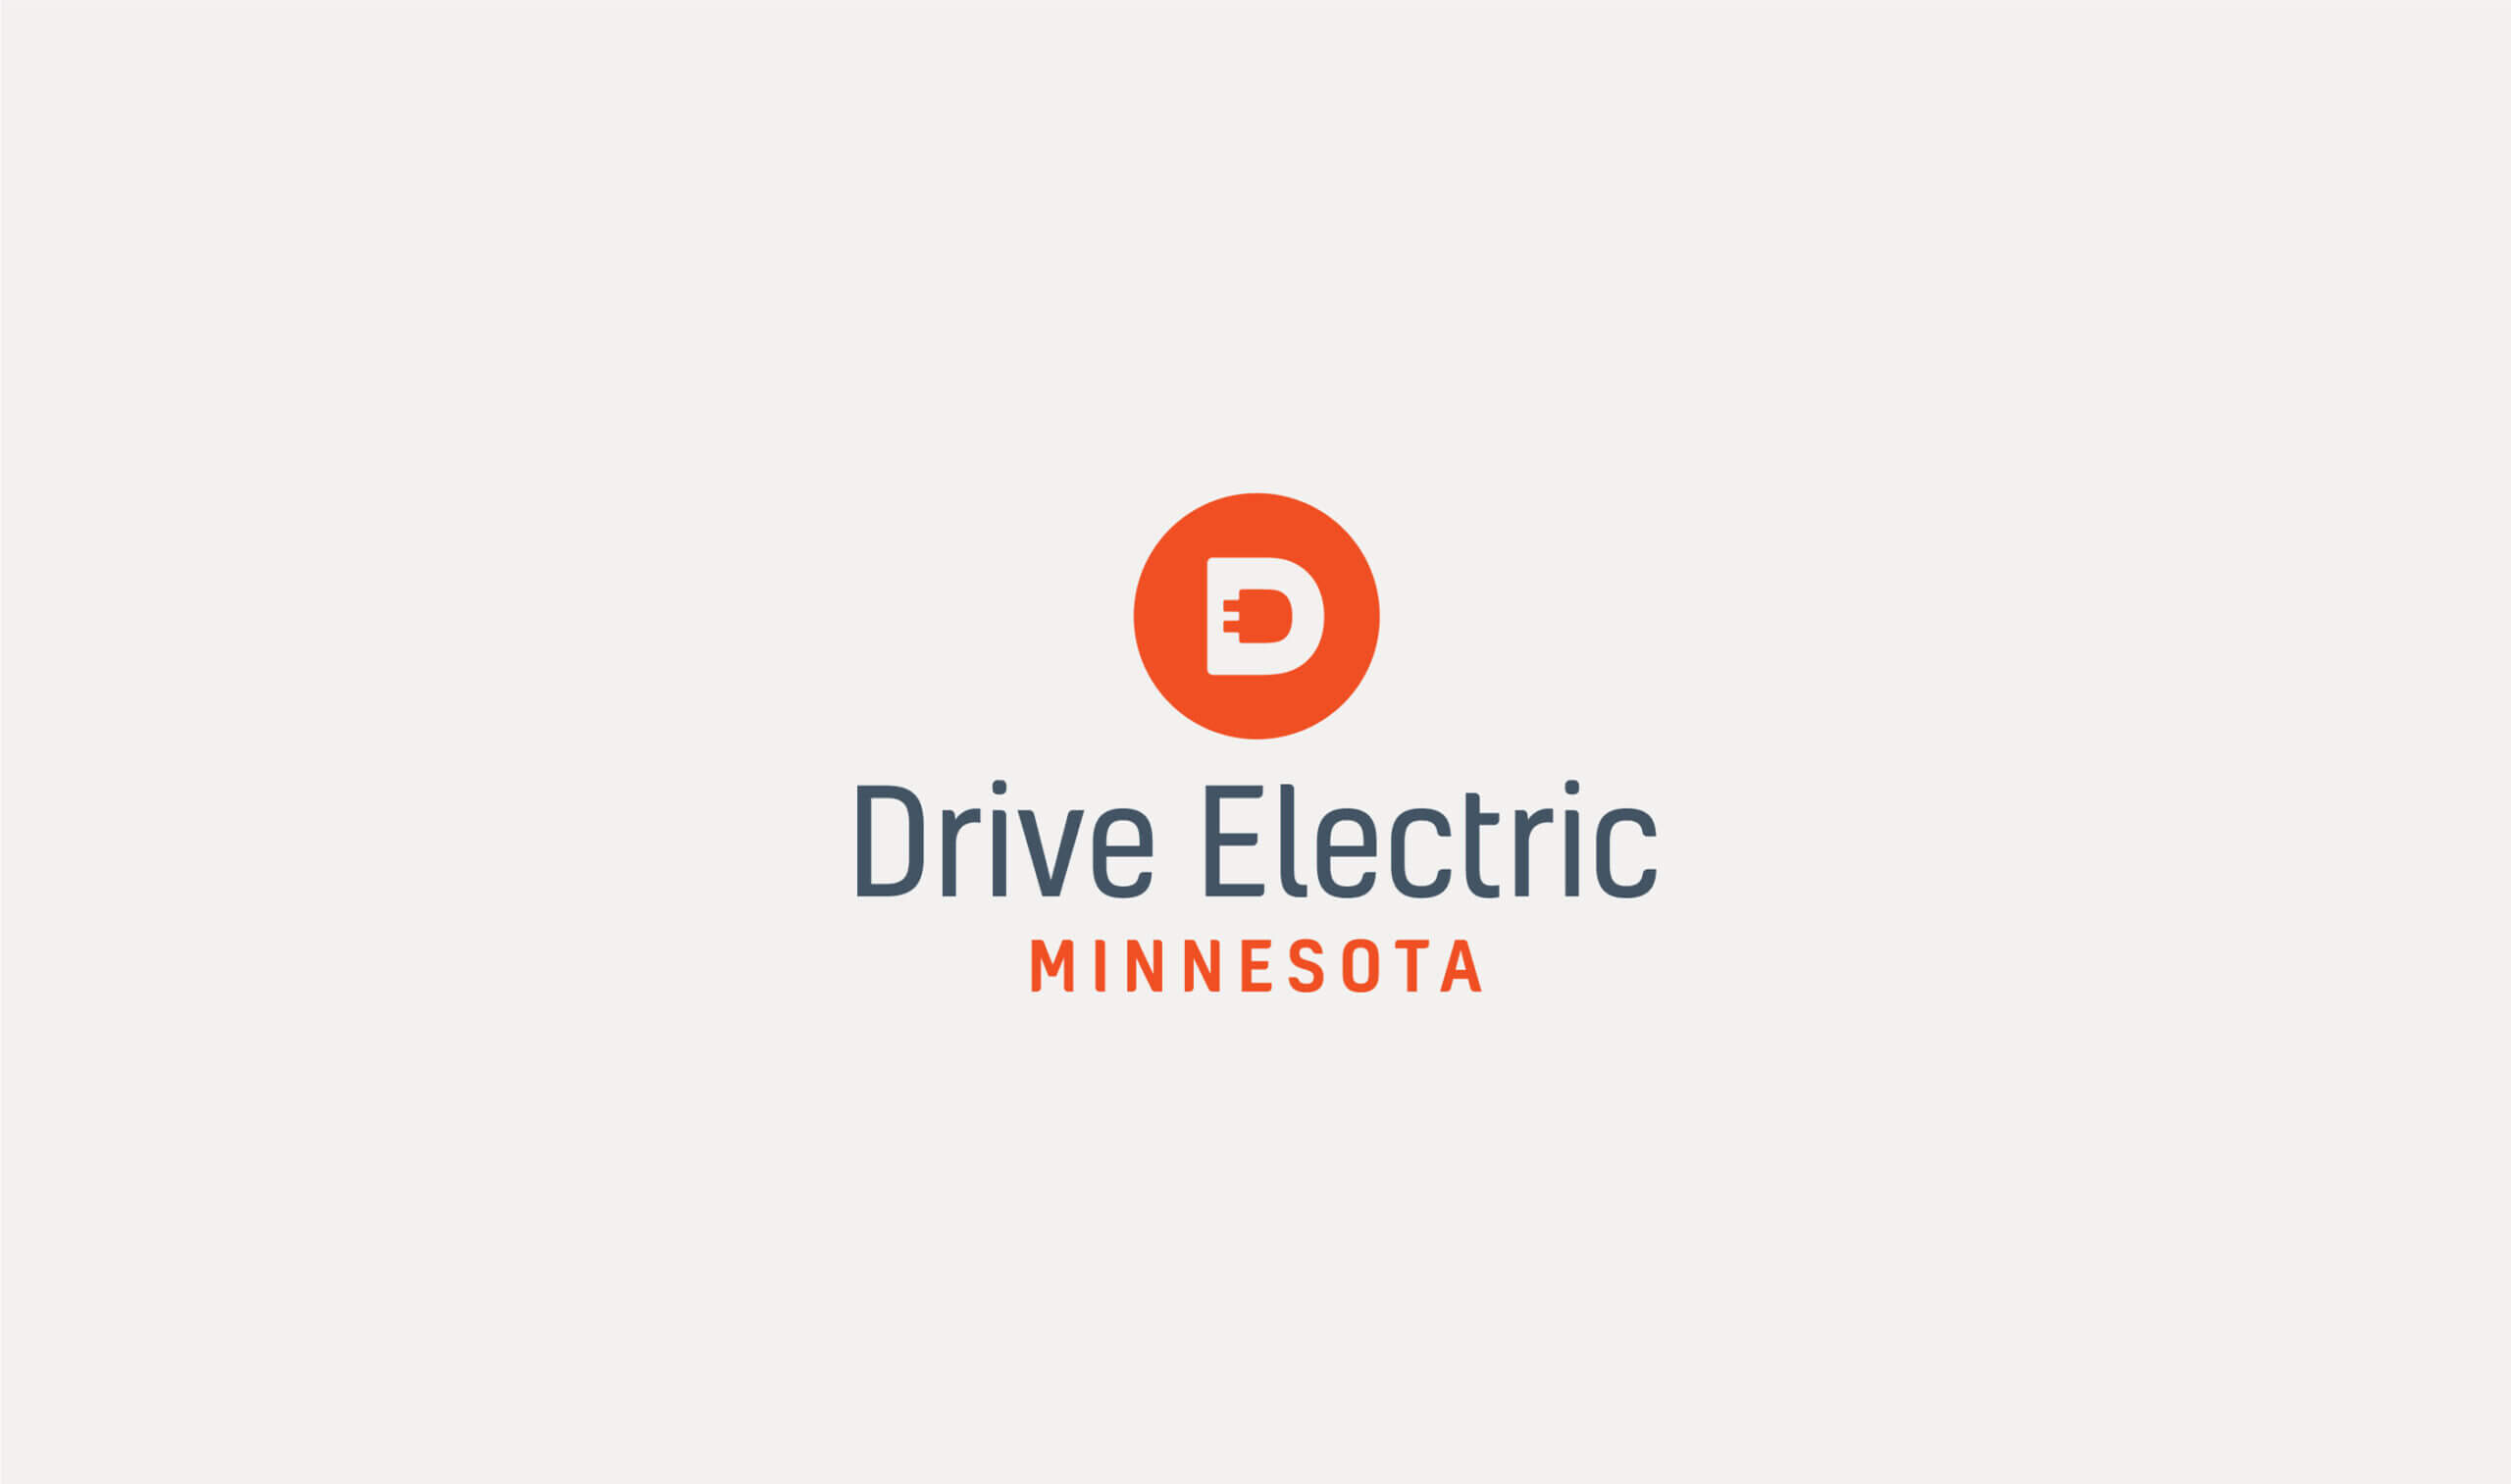 Drive Electric Minnesota logo and brand design